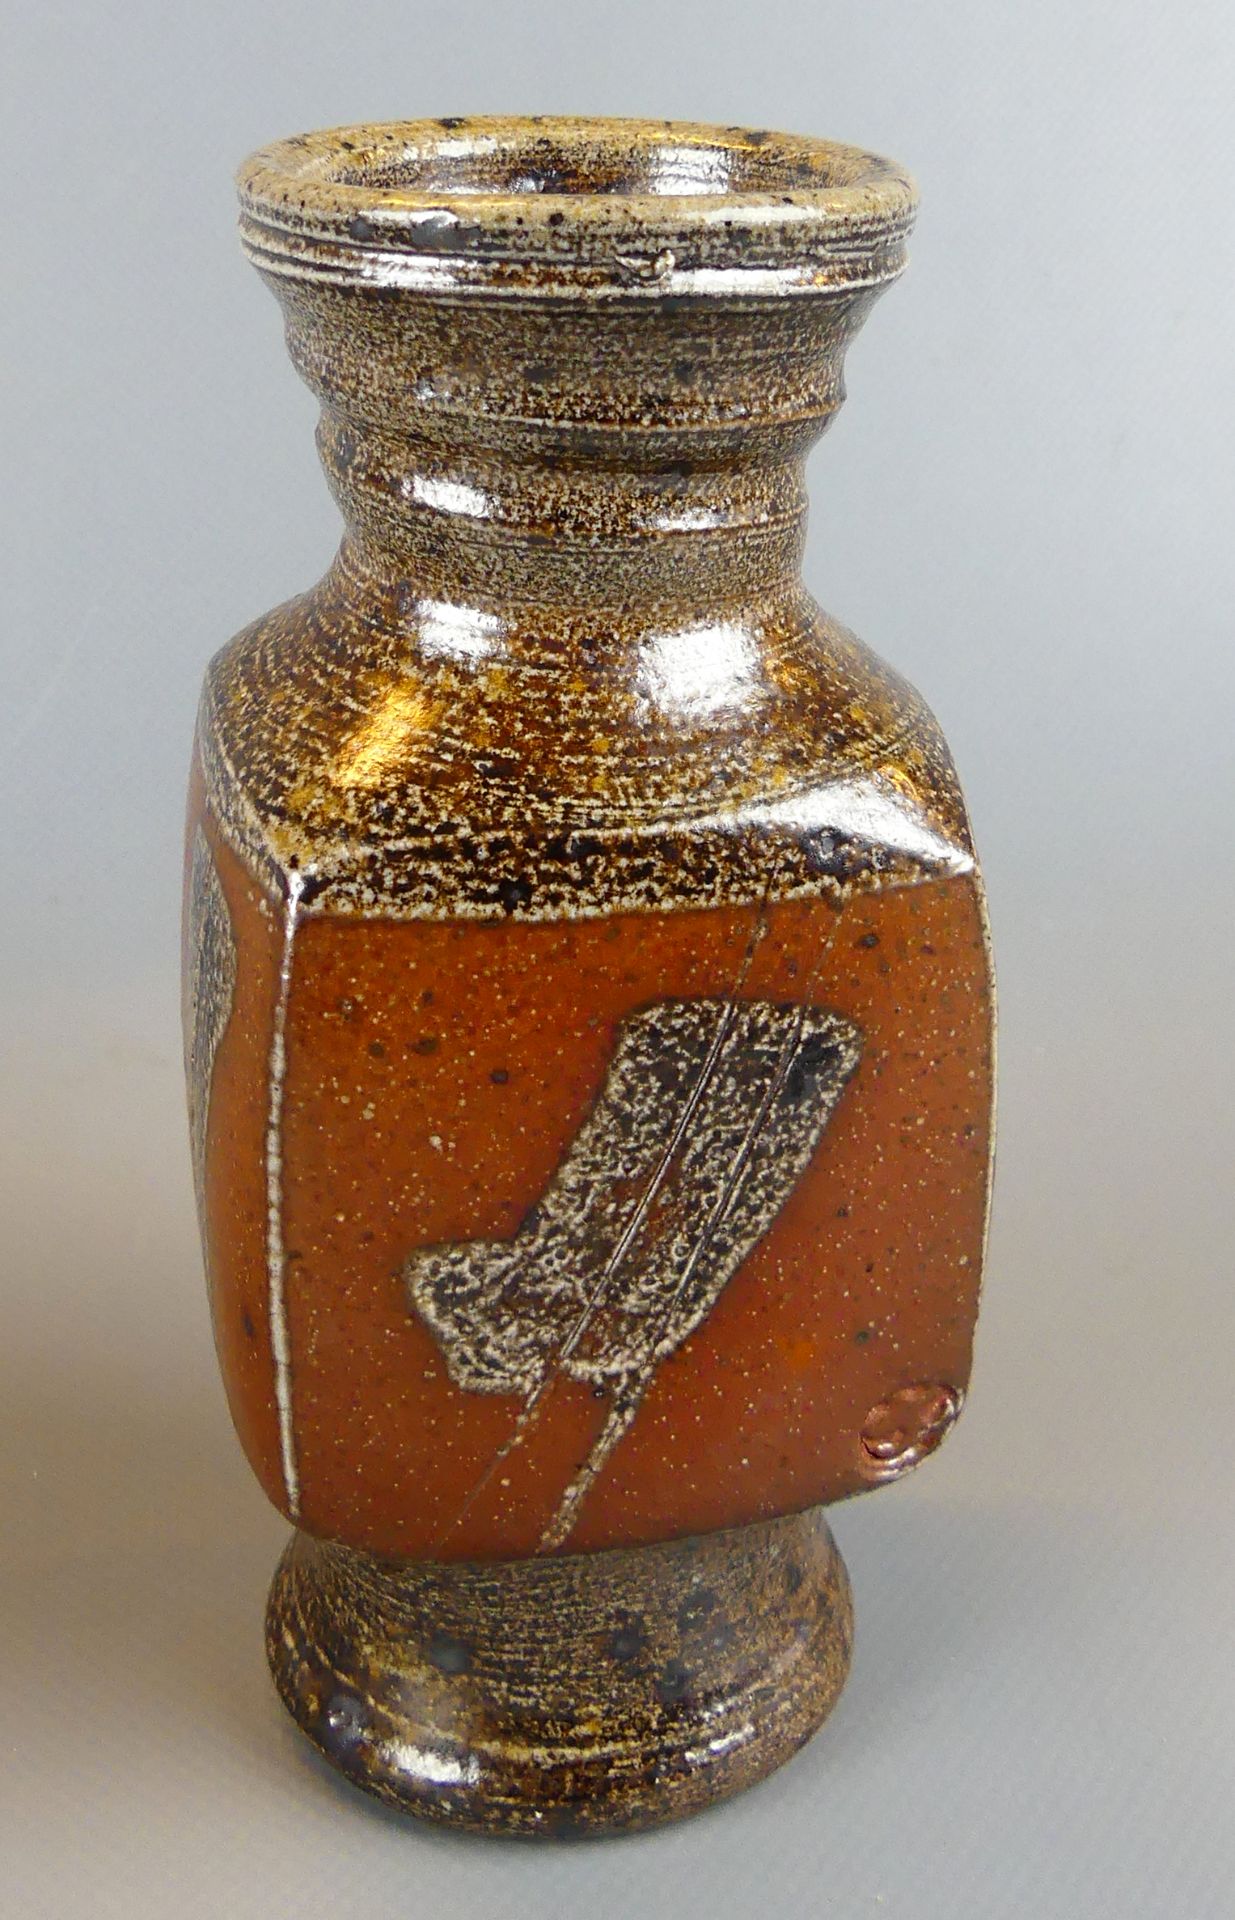 Vase, Keramik, eckige Bauchung, runder Fuß, verschiedene Ornamente,